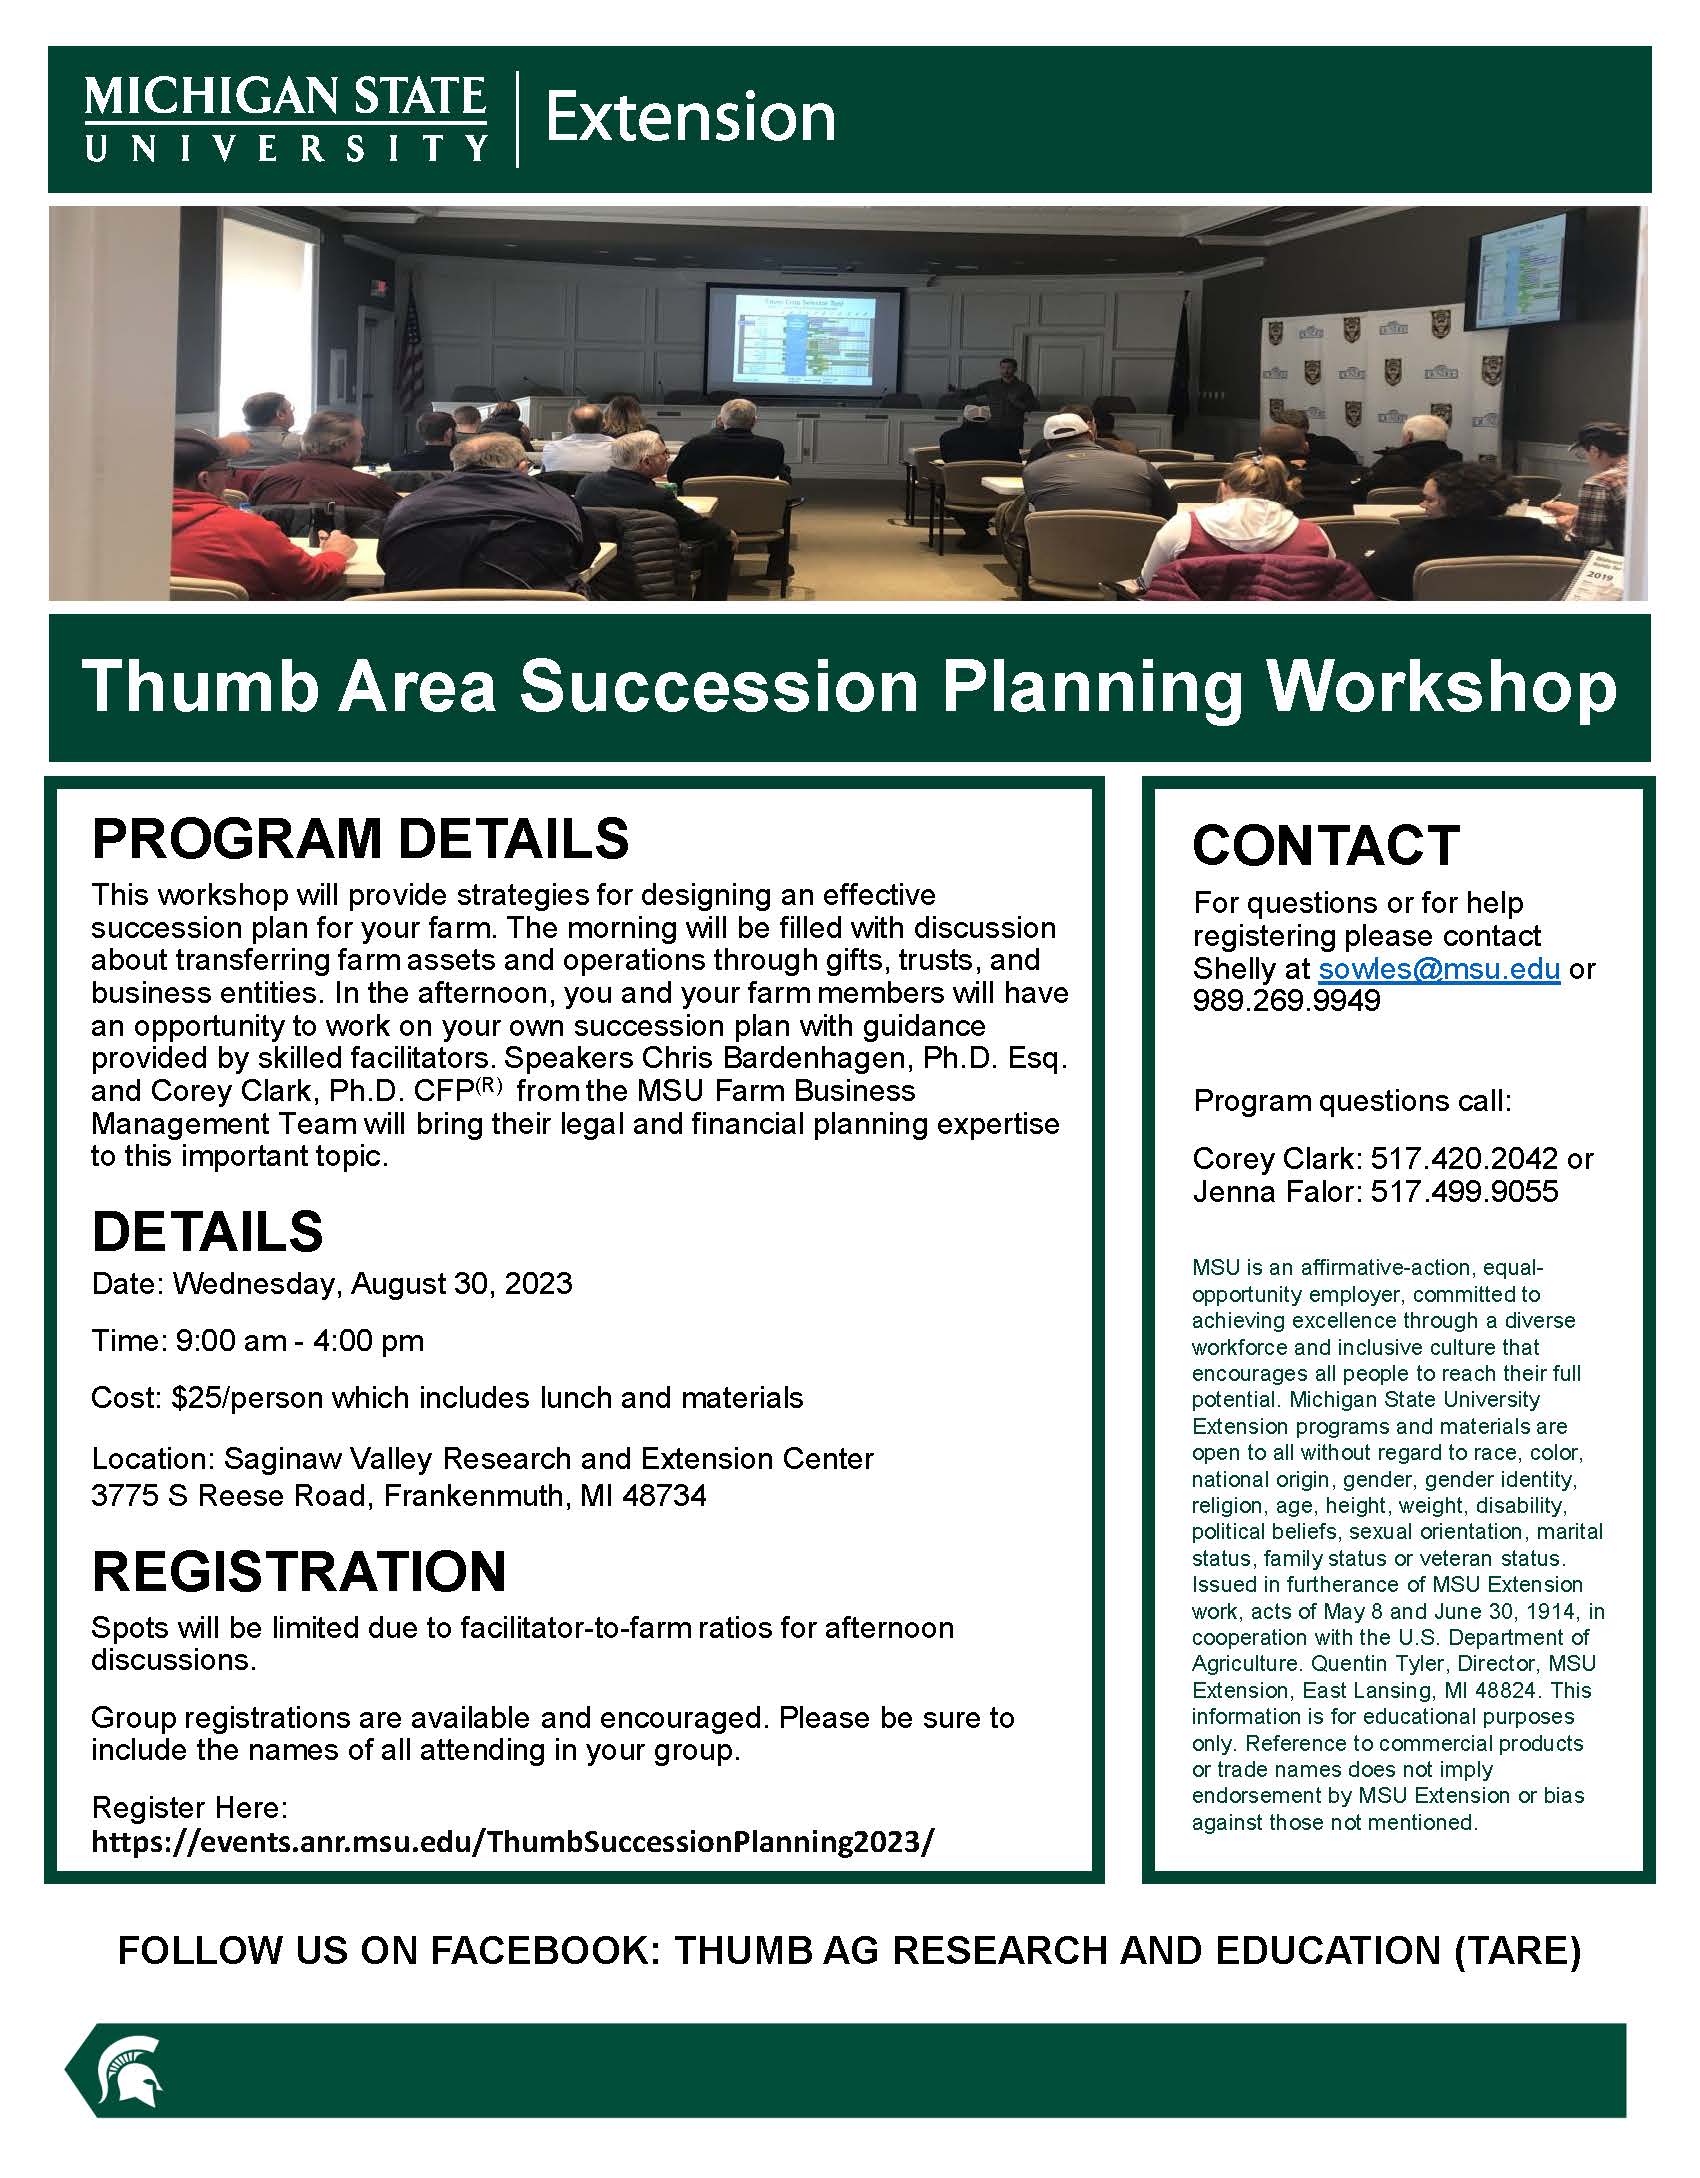 Thumb Farm Succession Plan Flyer2023 FINAL.jpg